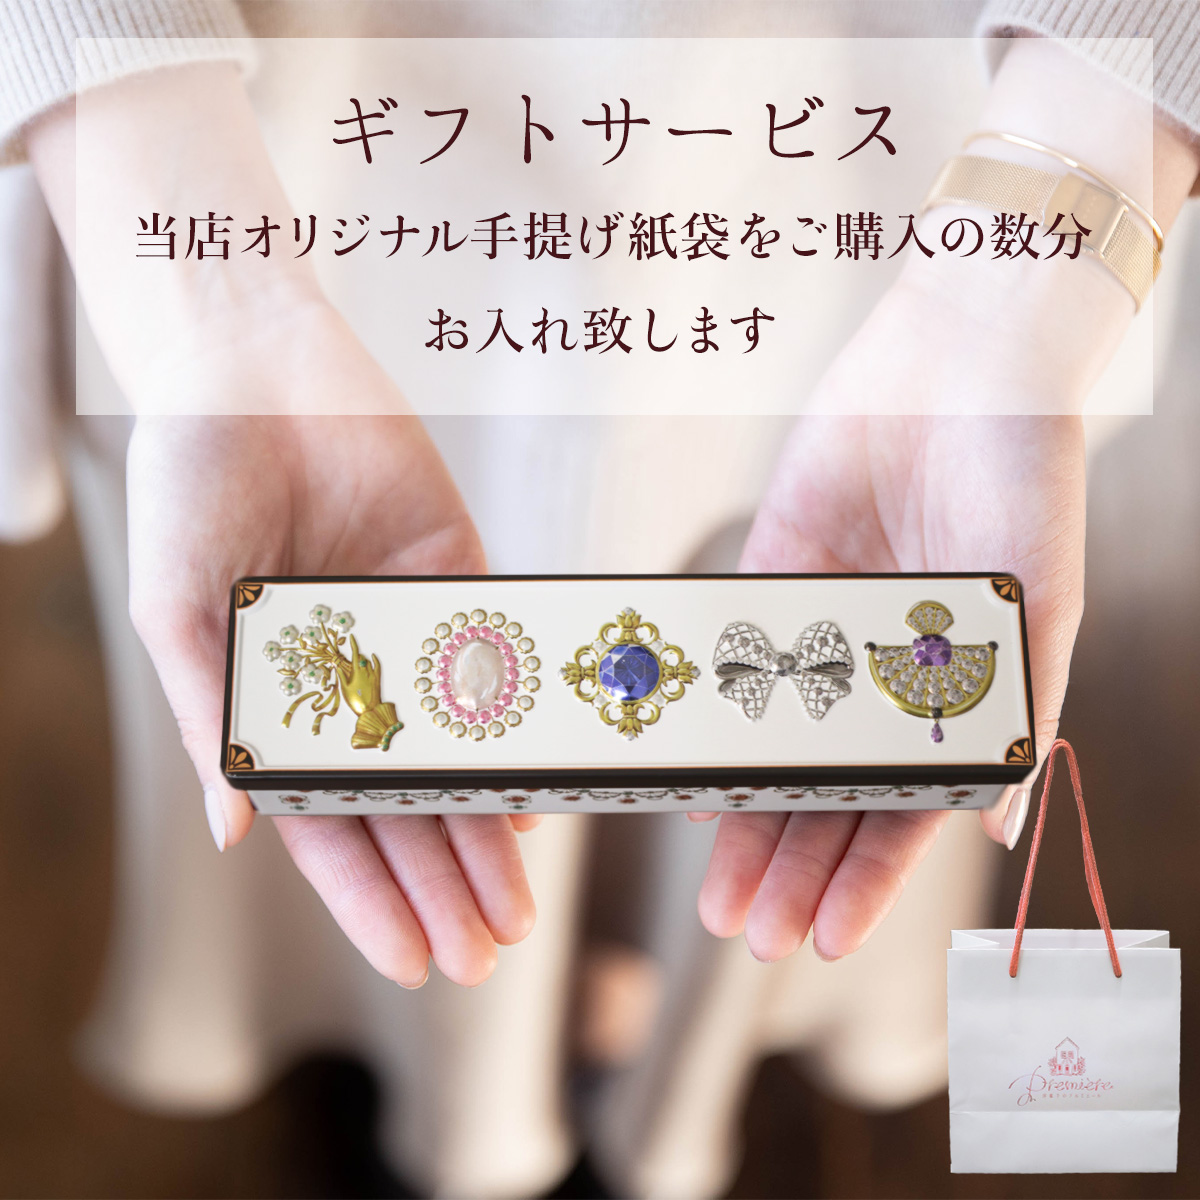 Luxury Jewellery Box Double Chocolate Sablé Cookies 12pcs Set with original gift bag